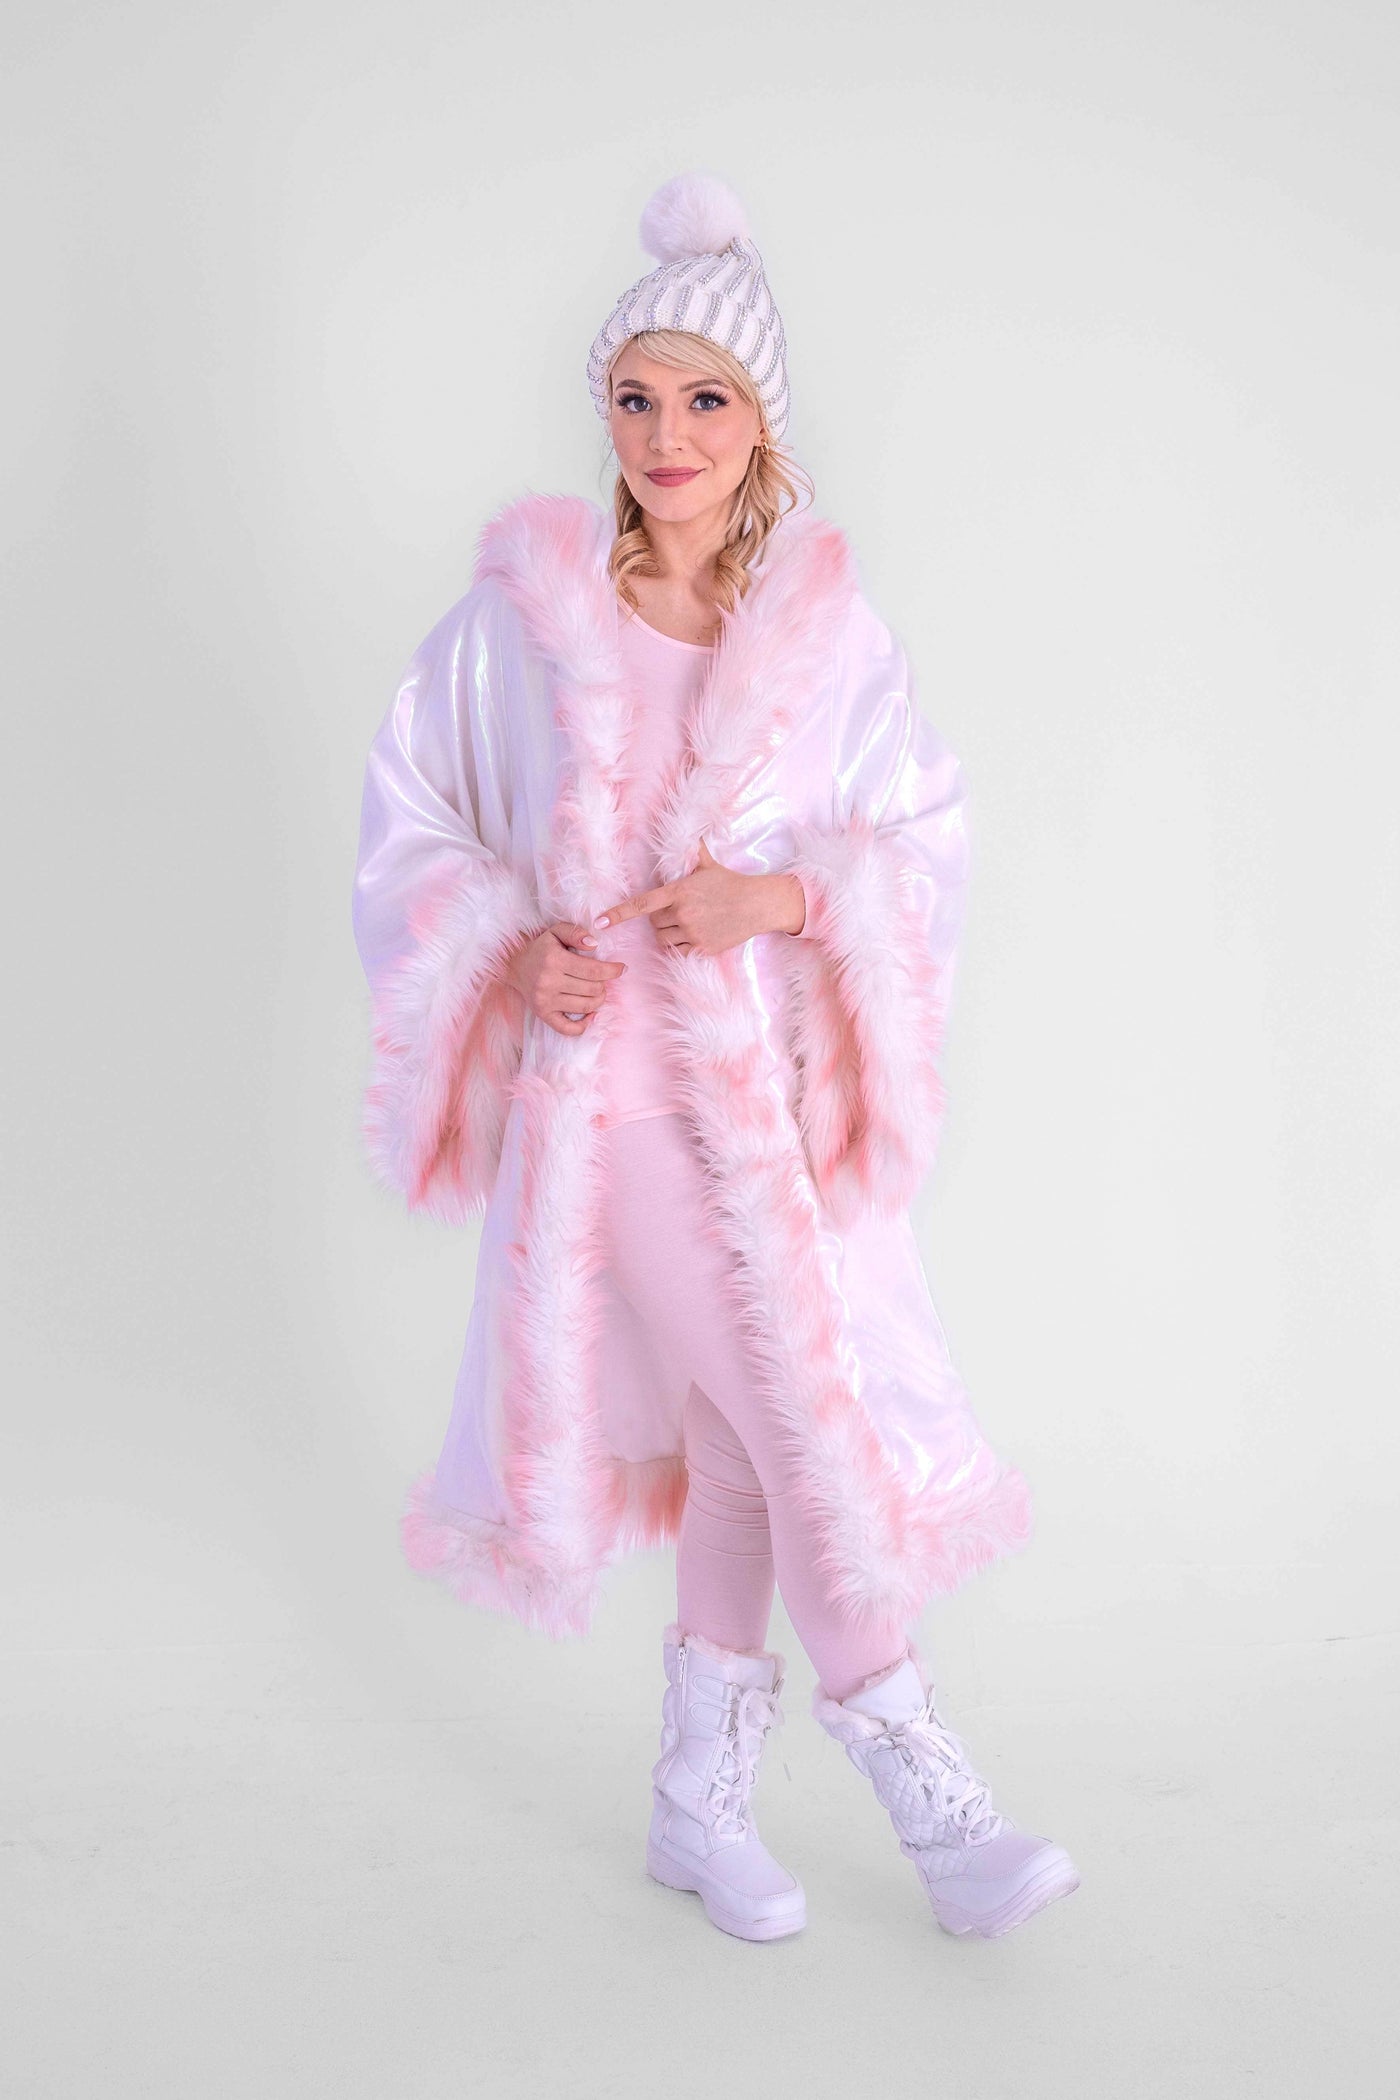 Sheer Magic Kimono in "Light Pink White "